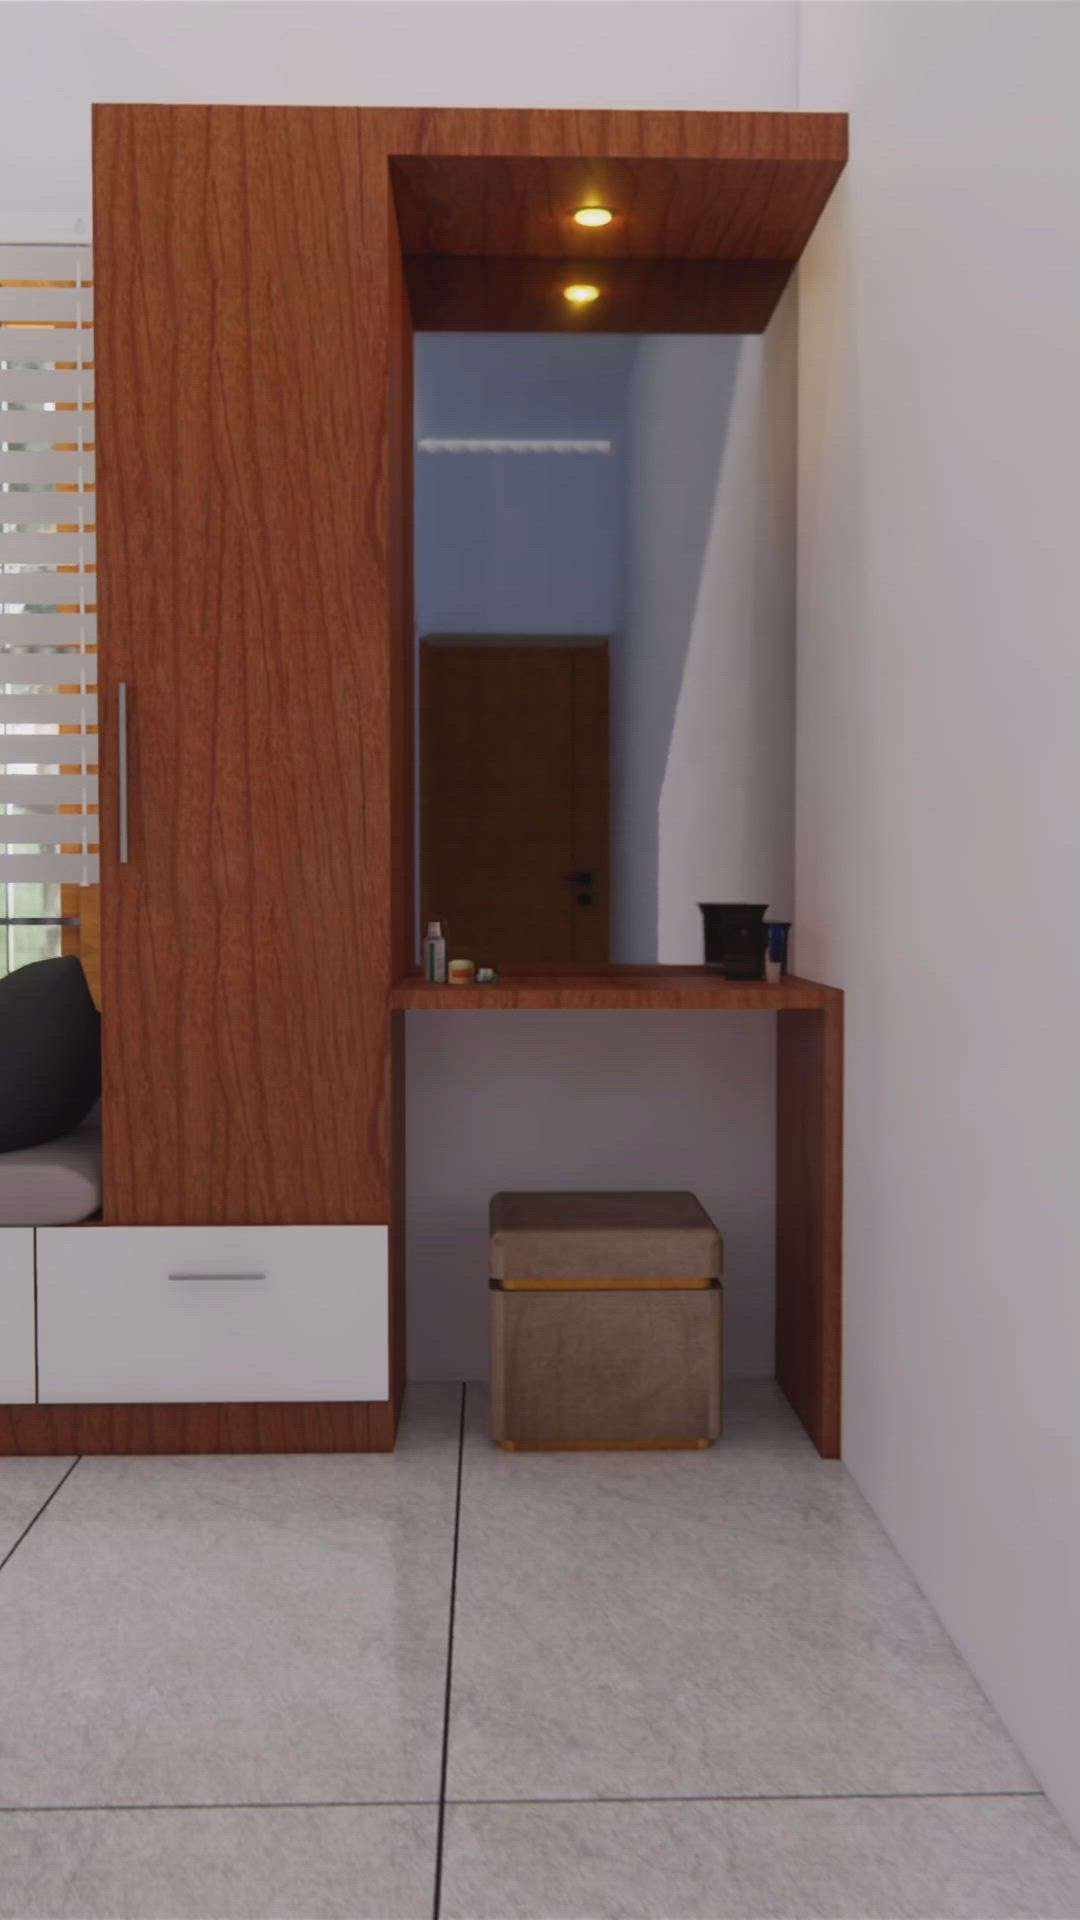 Bedroom with bay window.
#BedroomDesigns #design3dvideo #lumionwalkthrogh #Interior_Work #FlooringTiles #4DoorWardrobe  #sidetable #kerala #Kollam #Thiruvananthapuram #Malappuram #Ernakulam #Kozhikode